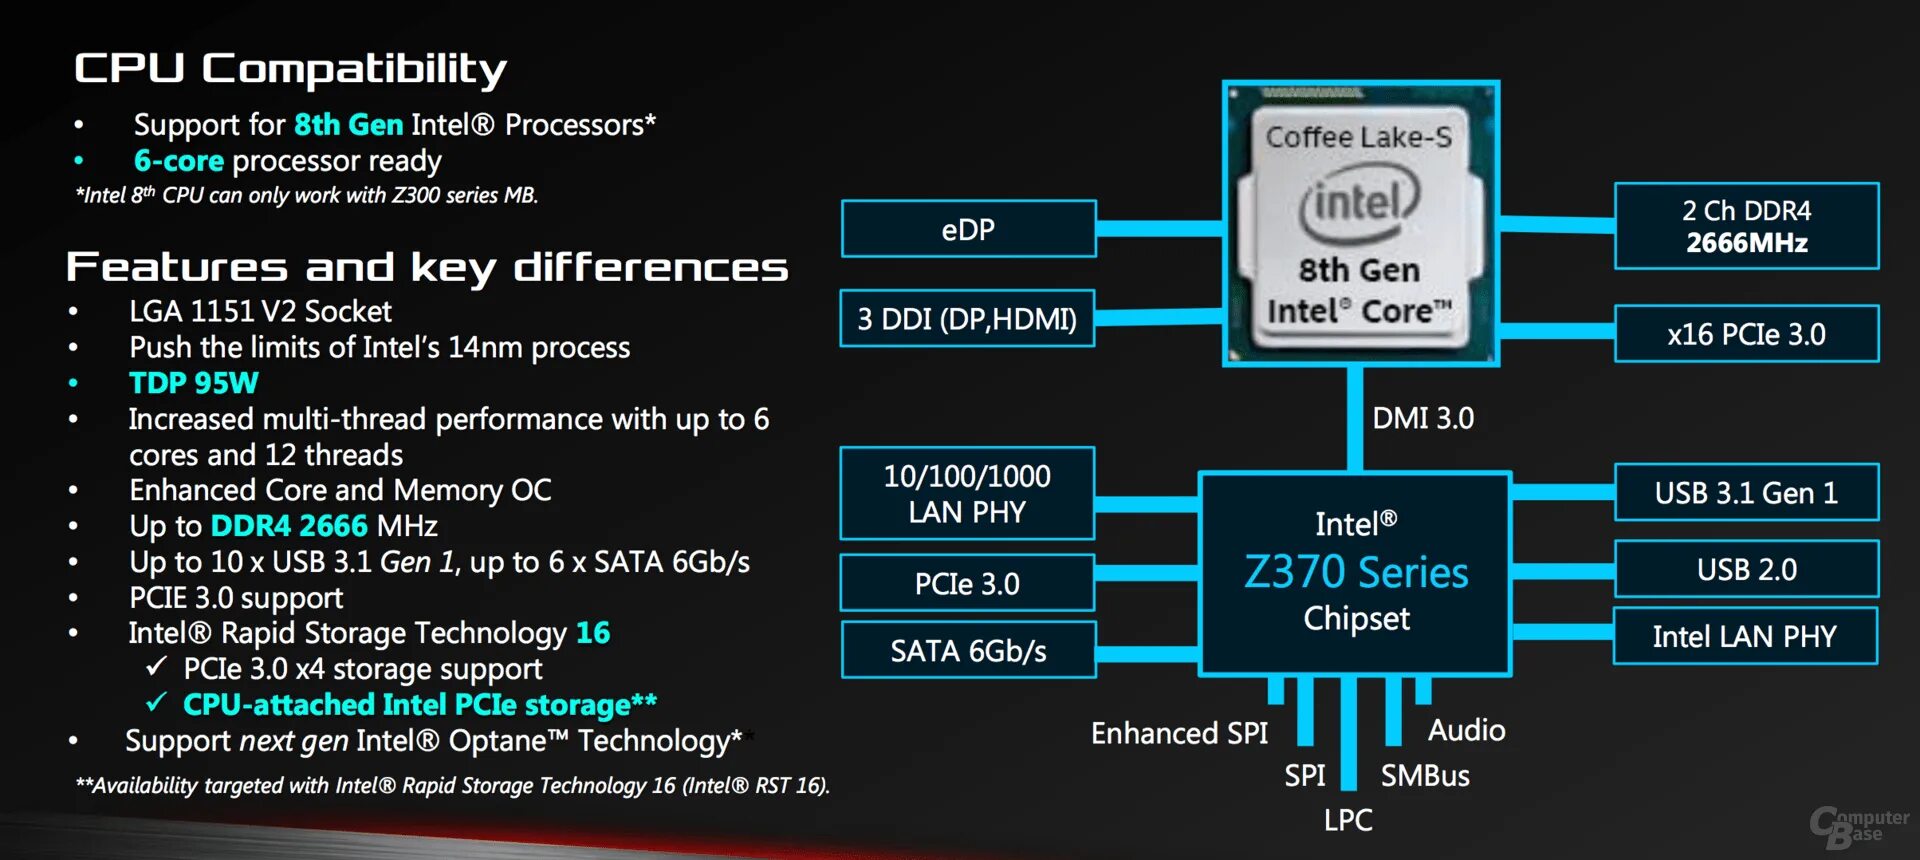 Intel Coffee Lake-s IMC. Архитектура Intel i7 8700. Intel DMI 4.0. Processor 8th Gen Intel. Intel 7 series chipset